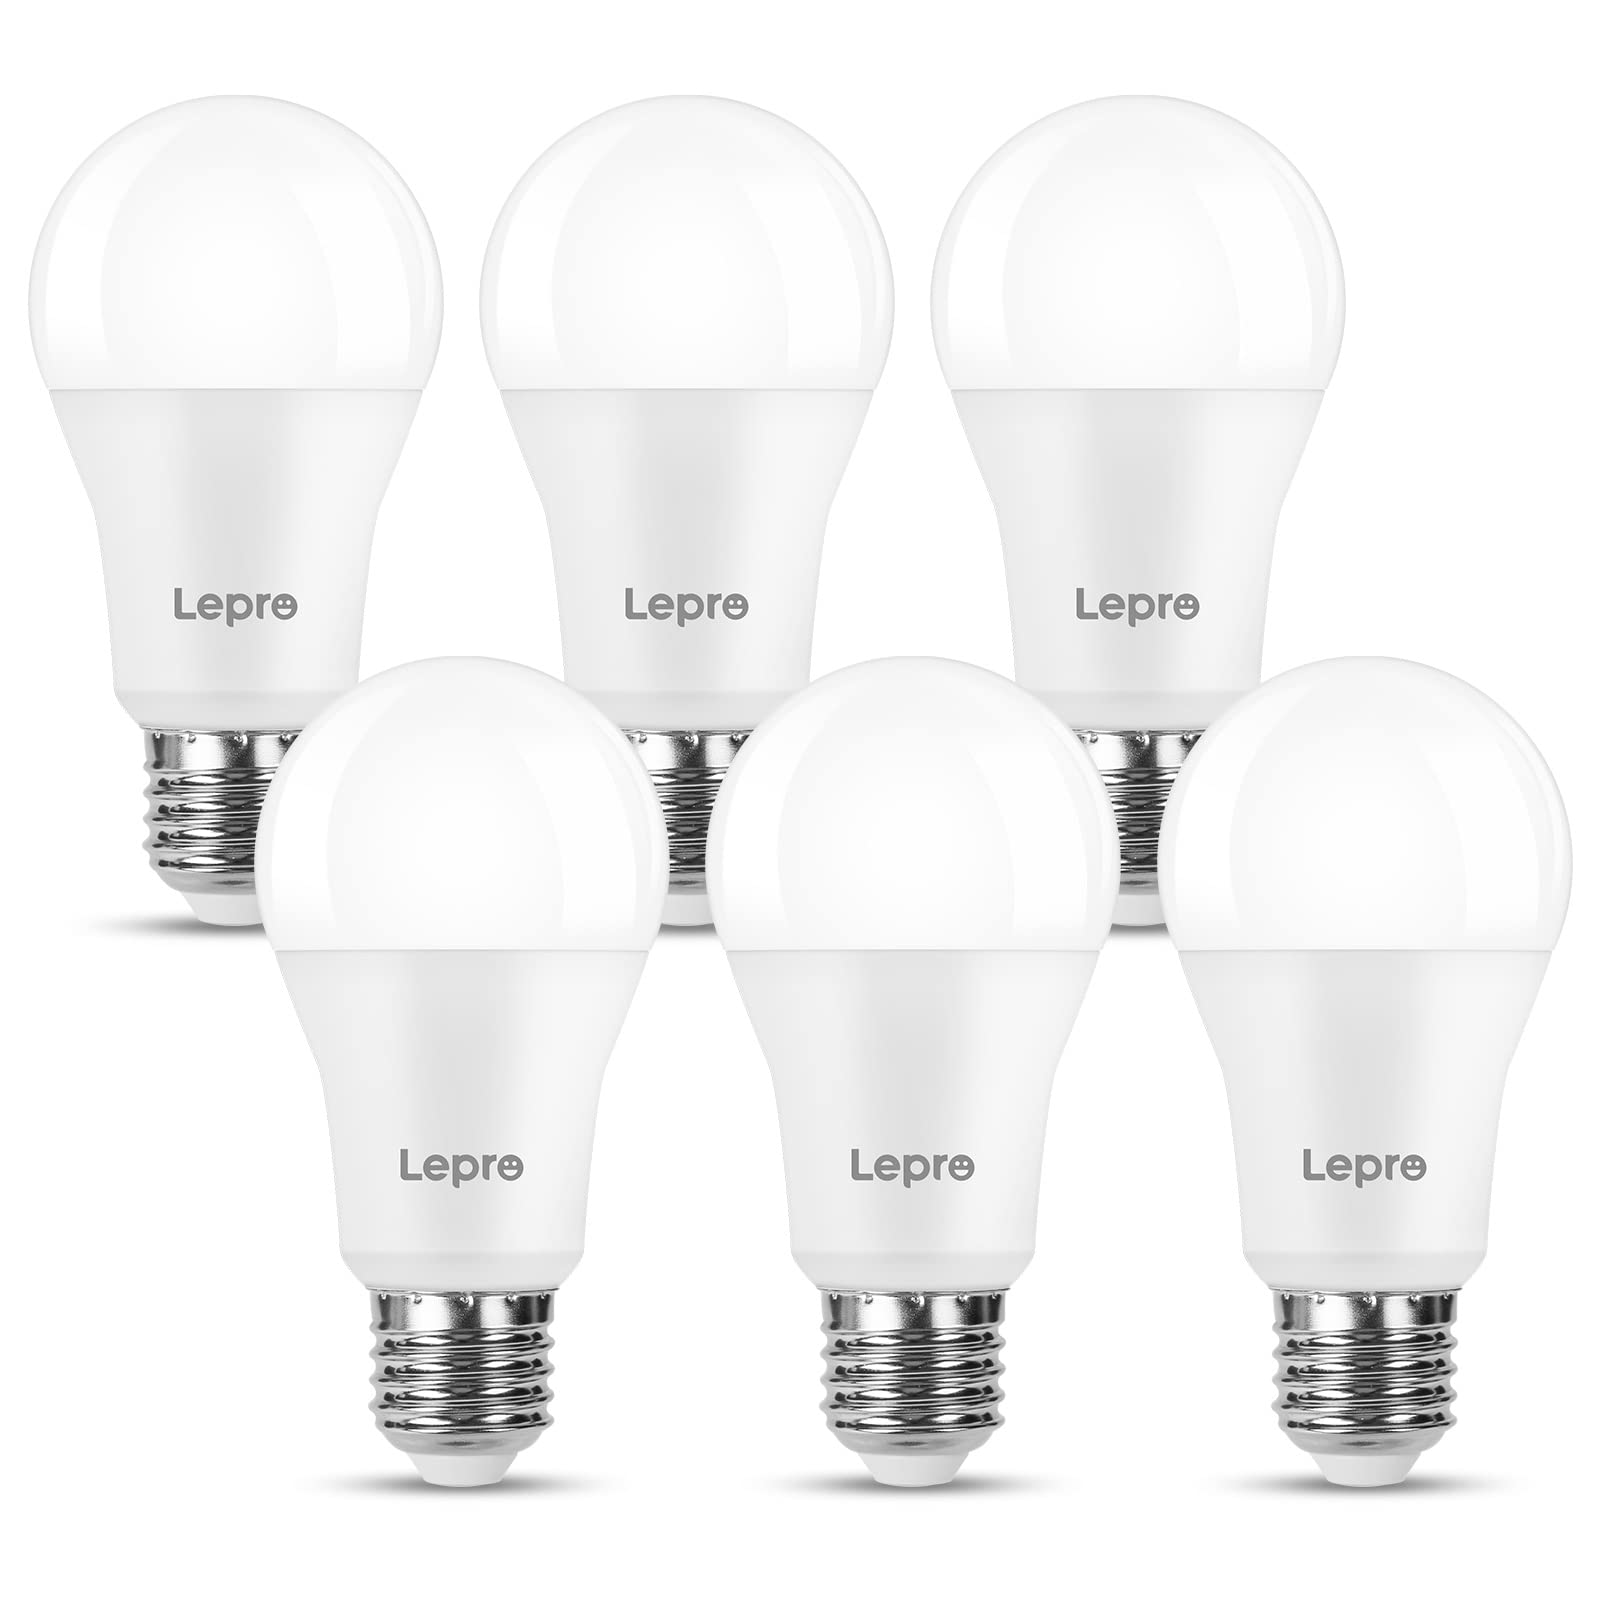 Lepro E27 LED Glühbirne, 13.5 W 1521 Lumen Super Hell LED Lampe E27, ersetzt 100W Halogenlampe A60 Leuchtmittel E27, 6500 Kelvin Kaltweiß LED Bulb, 6er Set, 200° Energiesparlampe